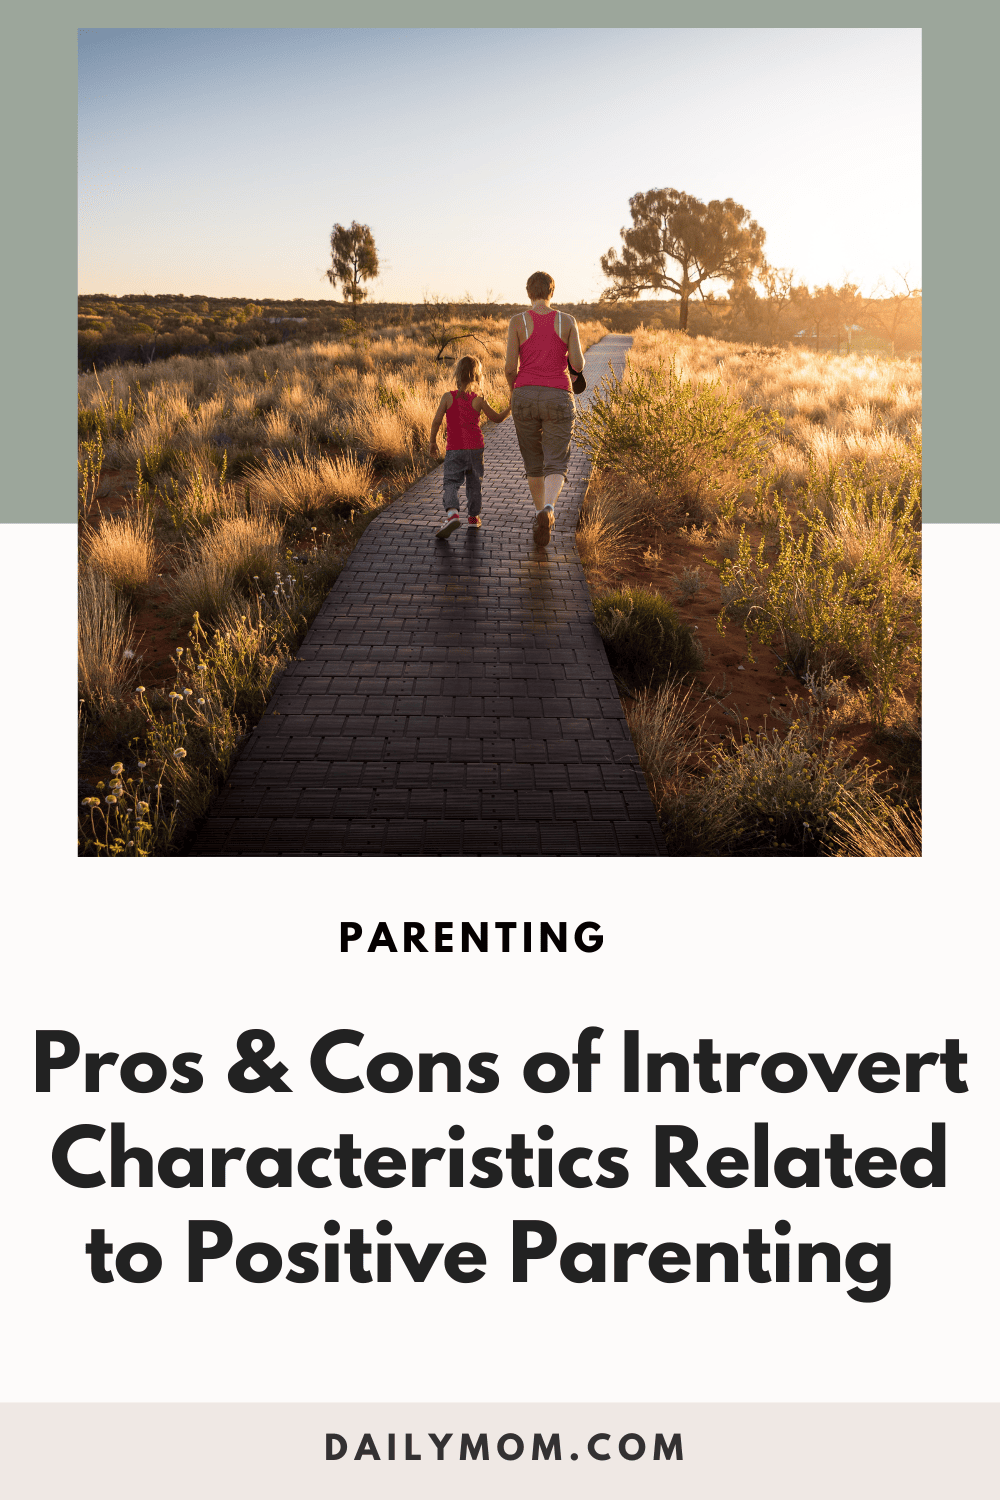 Daily-Mom-Introvert-Characteristics